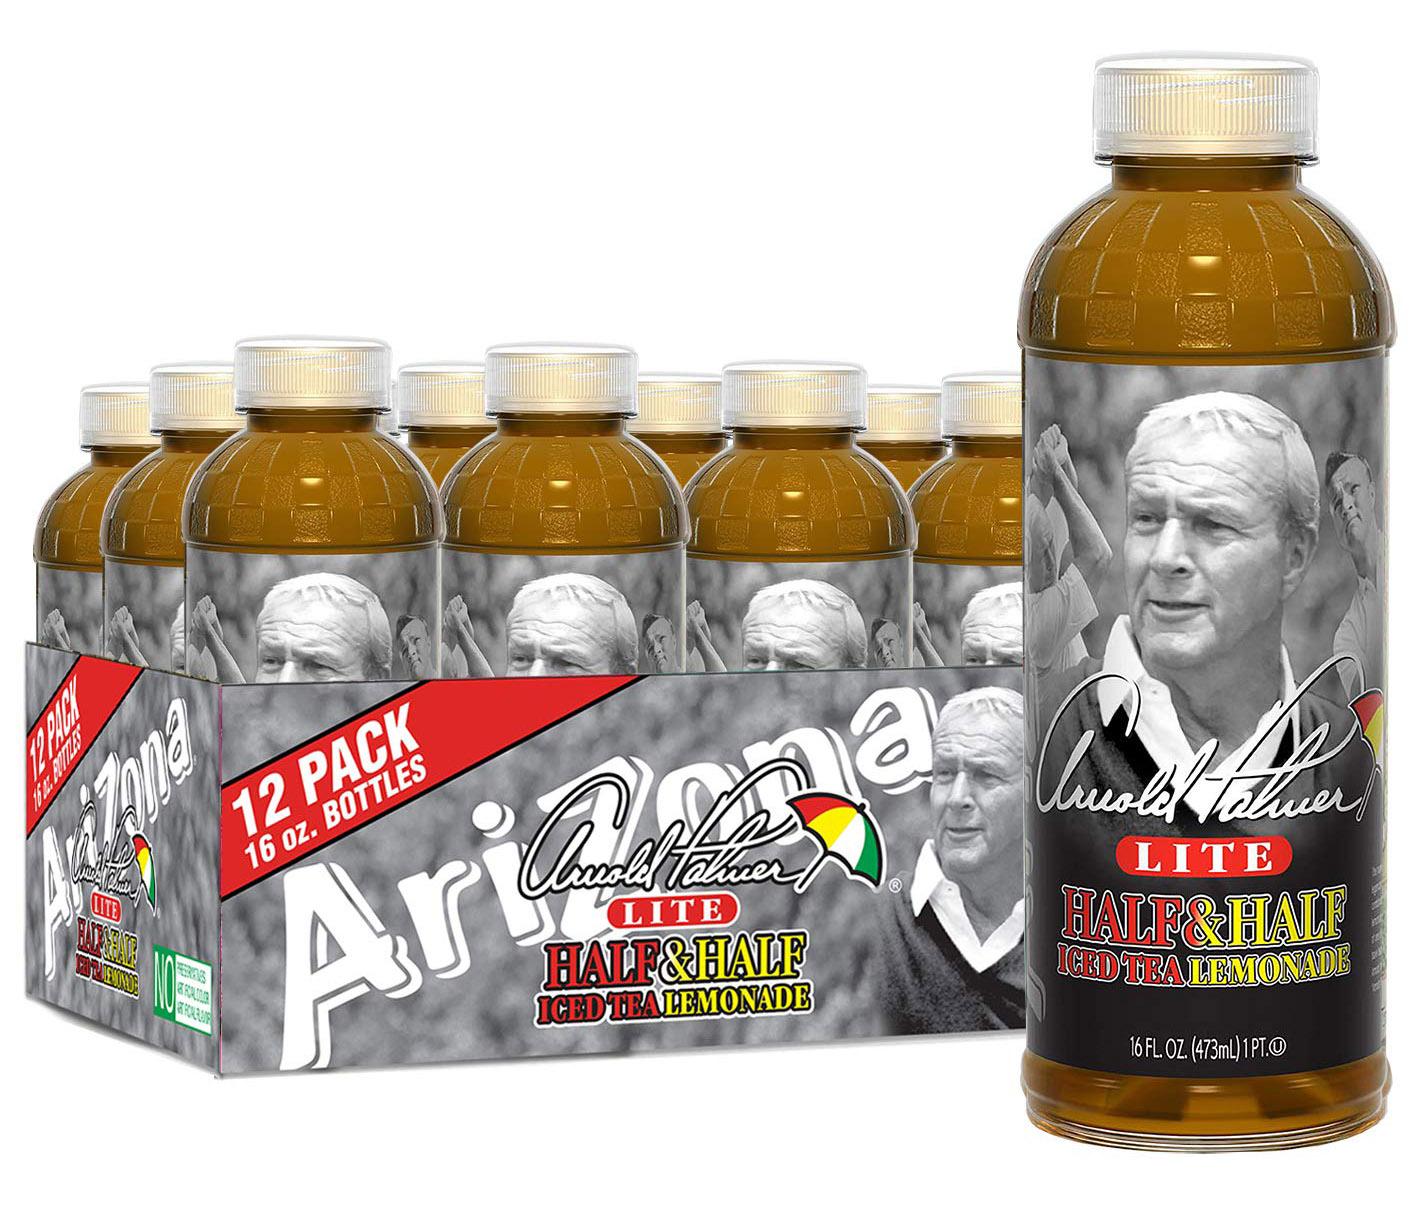 Arizona Arnold Palmer Half and Half Iced Tea and Lemonade 12 Pack for $5.98